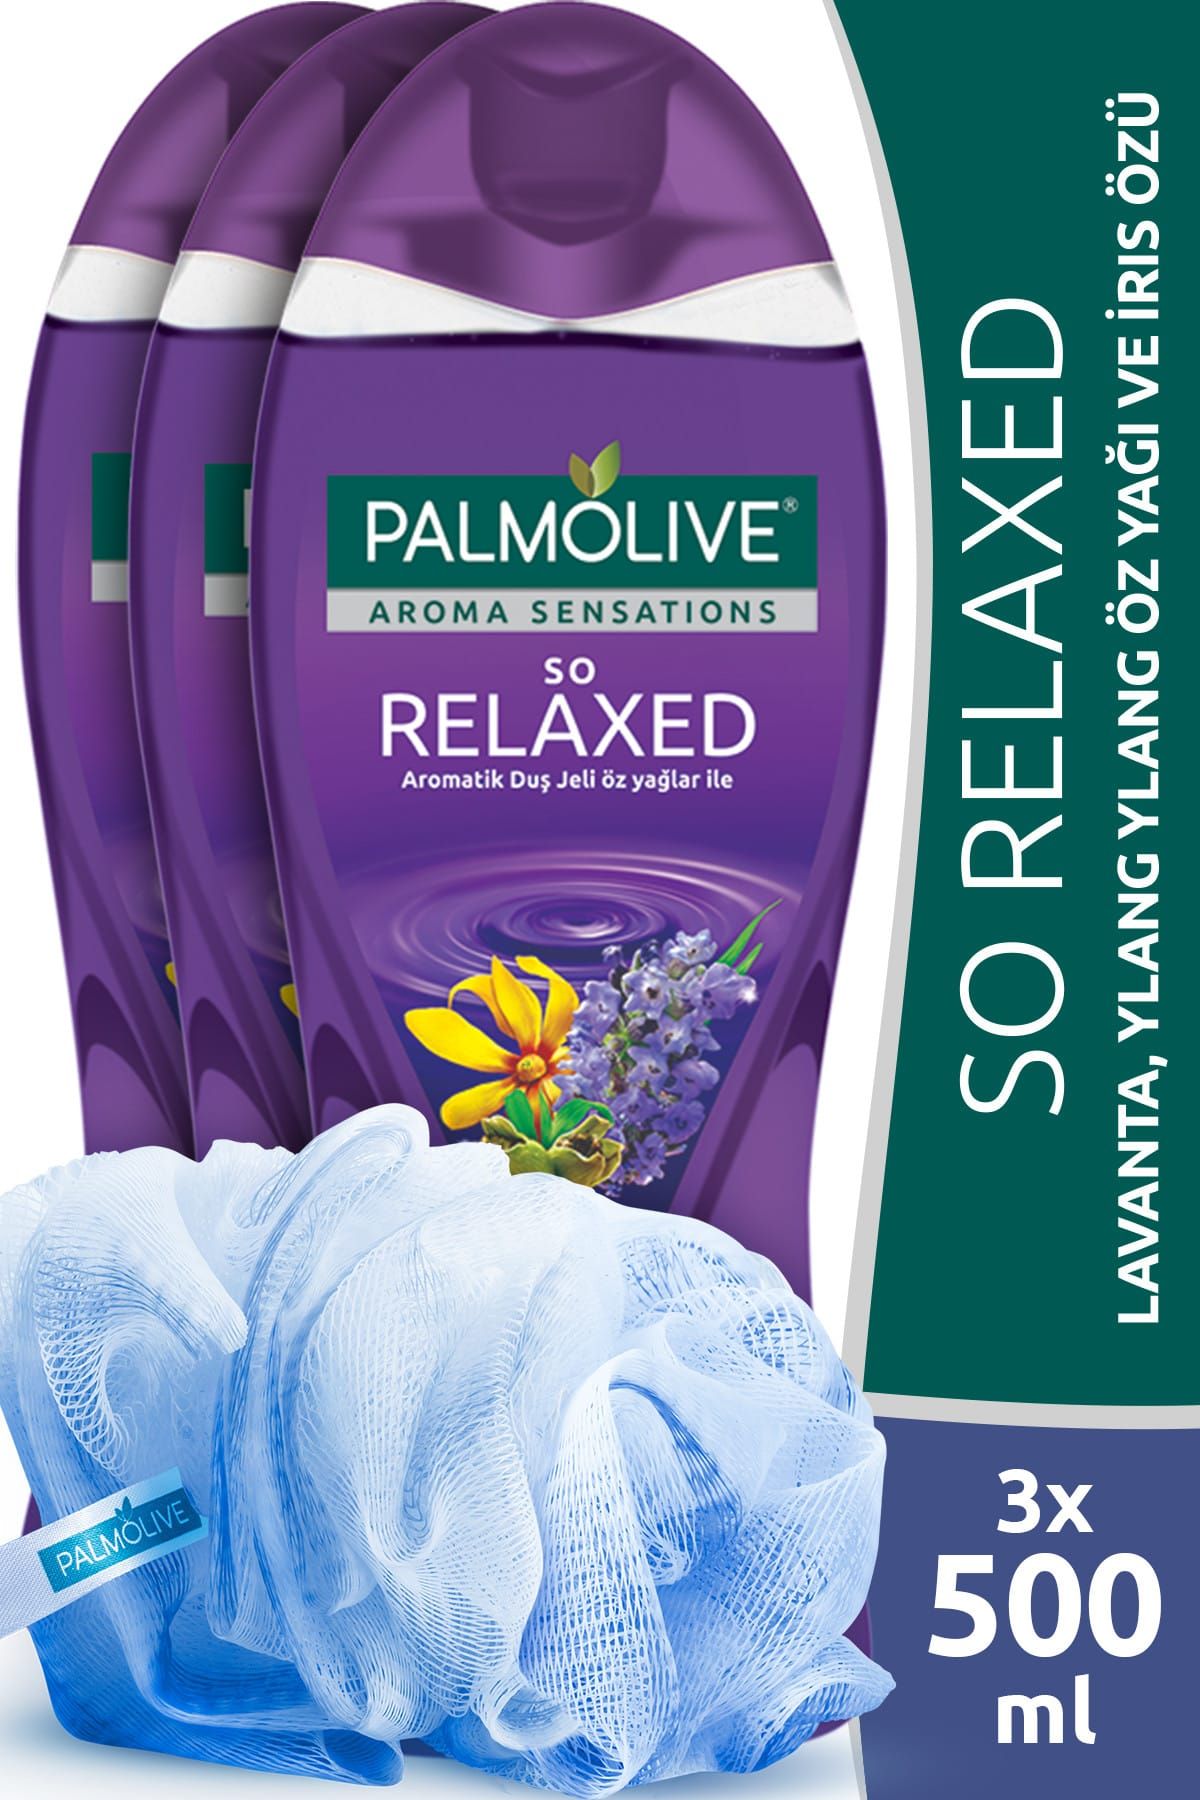 Palmolive Aroma Sensations So Relaxed Duş Jeli 500 ml x 3 Adet + Duş Lifi Hediye